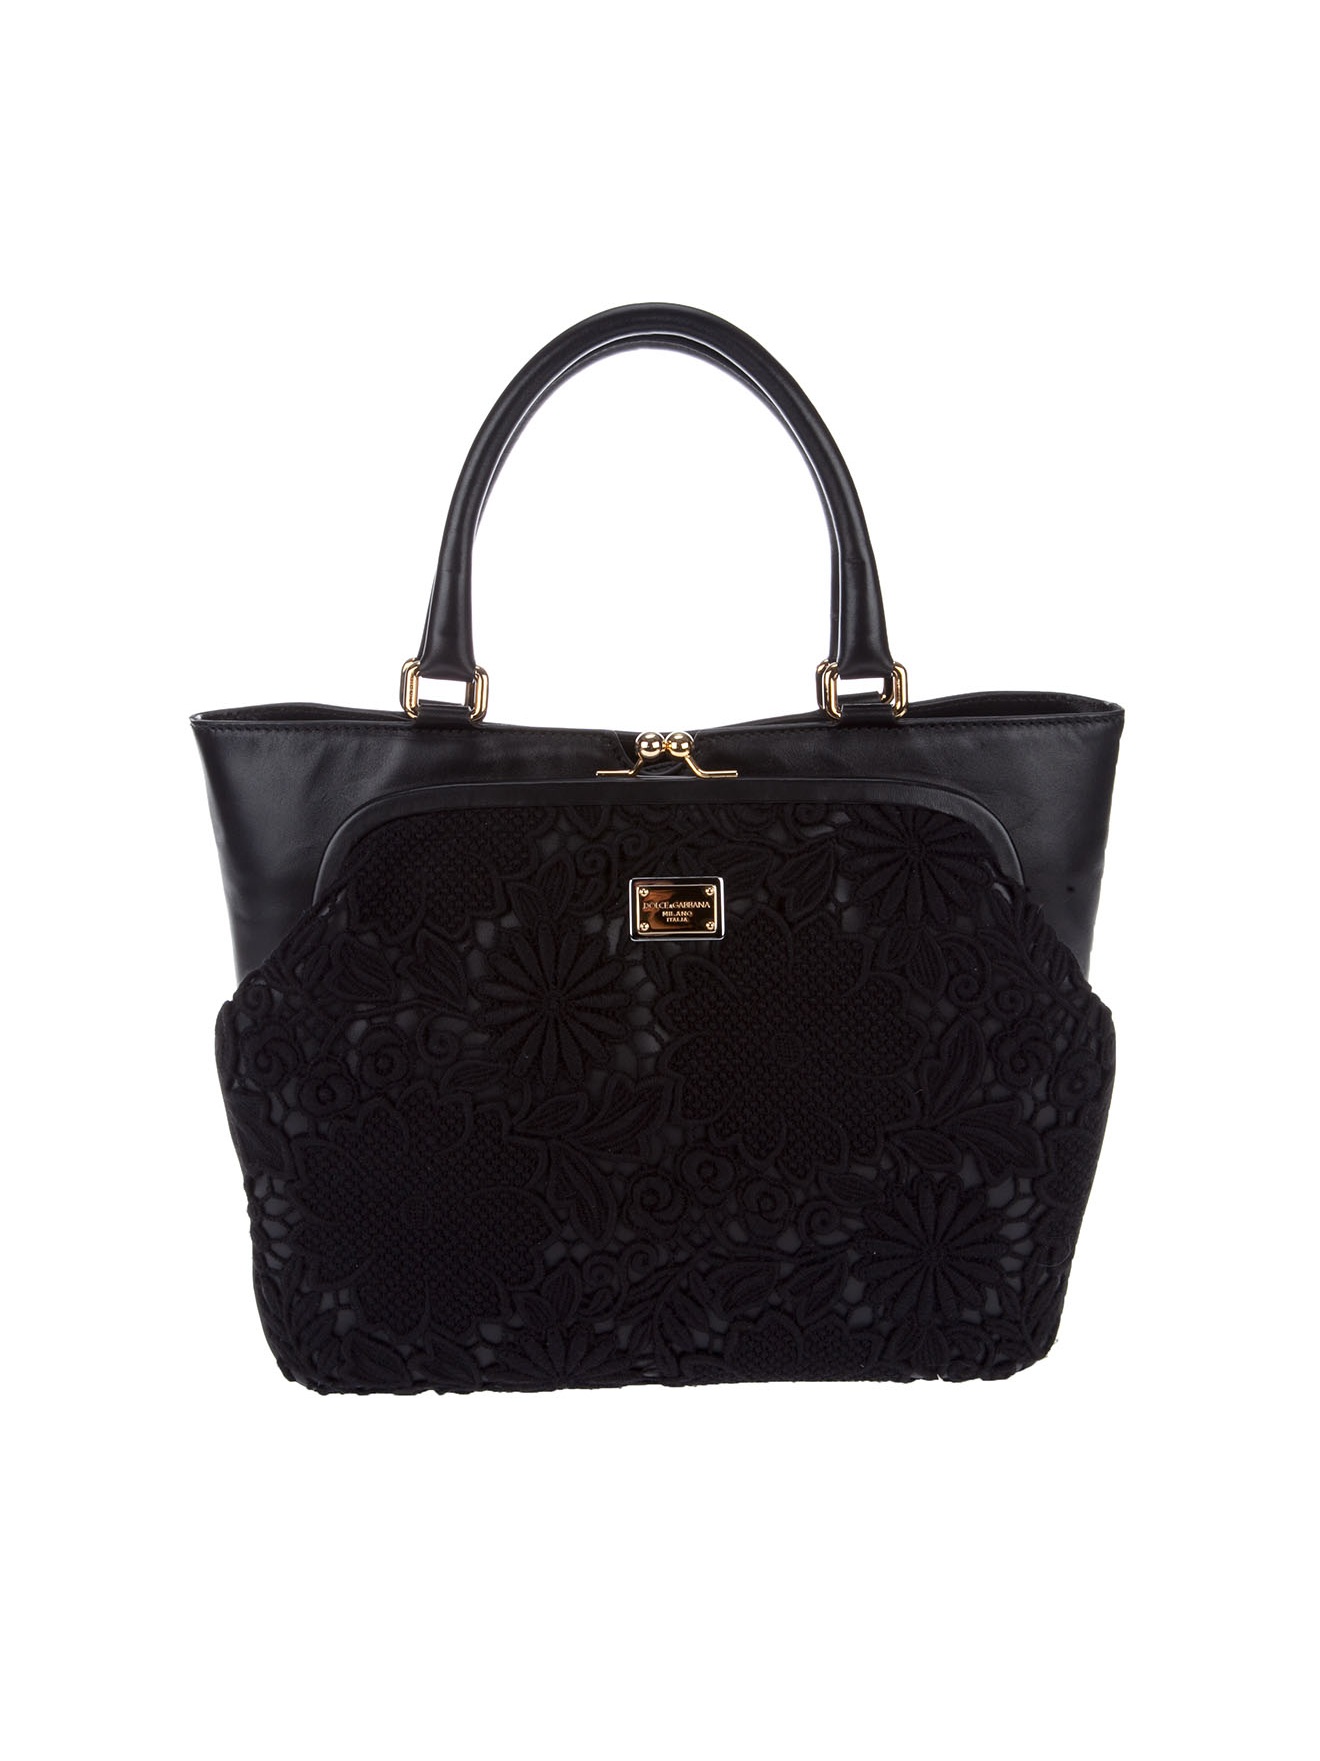 Dolce & Gabbana Purse Detail Handbag in Black | Lyst